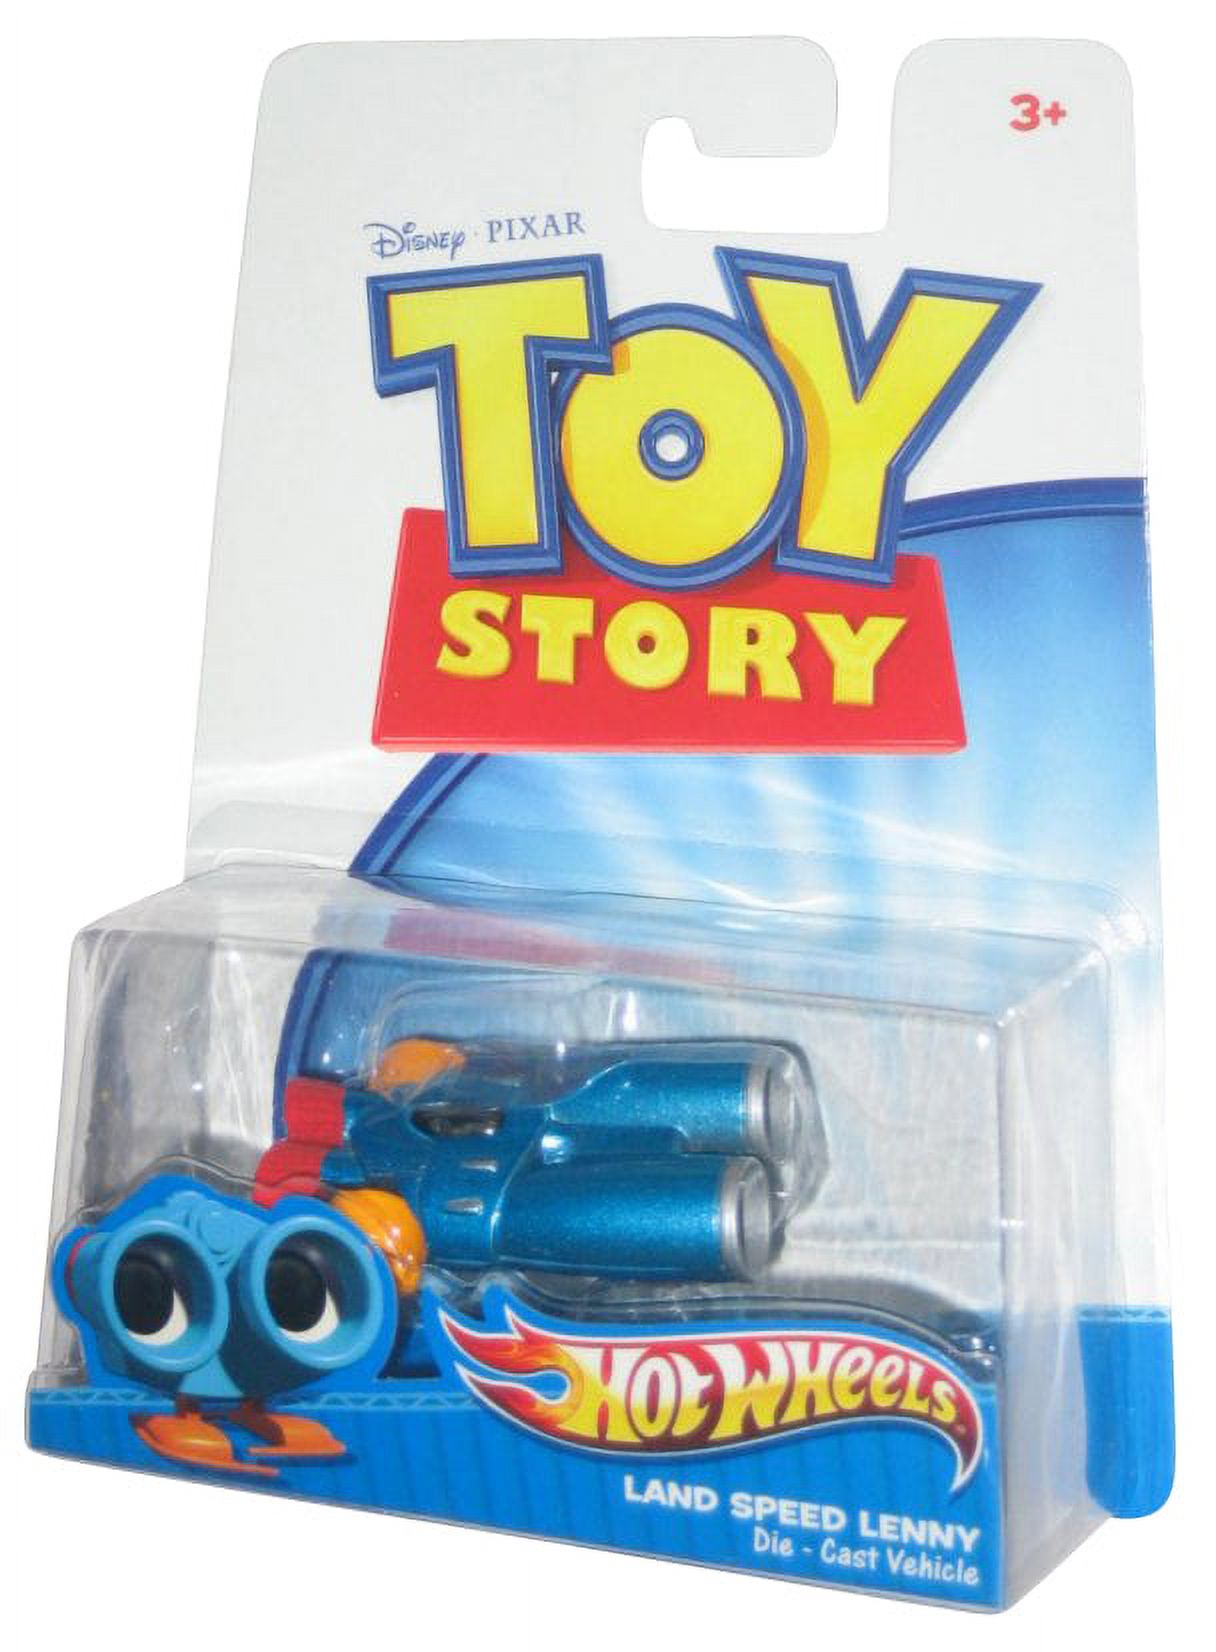 Disney Pixar Toy Story Hot Wheels Land Speed Lenny Die-Cast Mattel Vehicle Toy Car - image 1 of 1